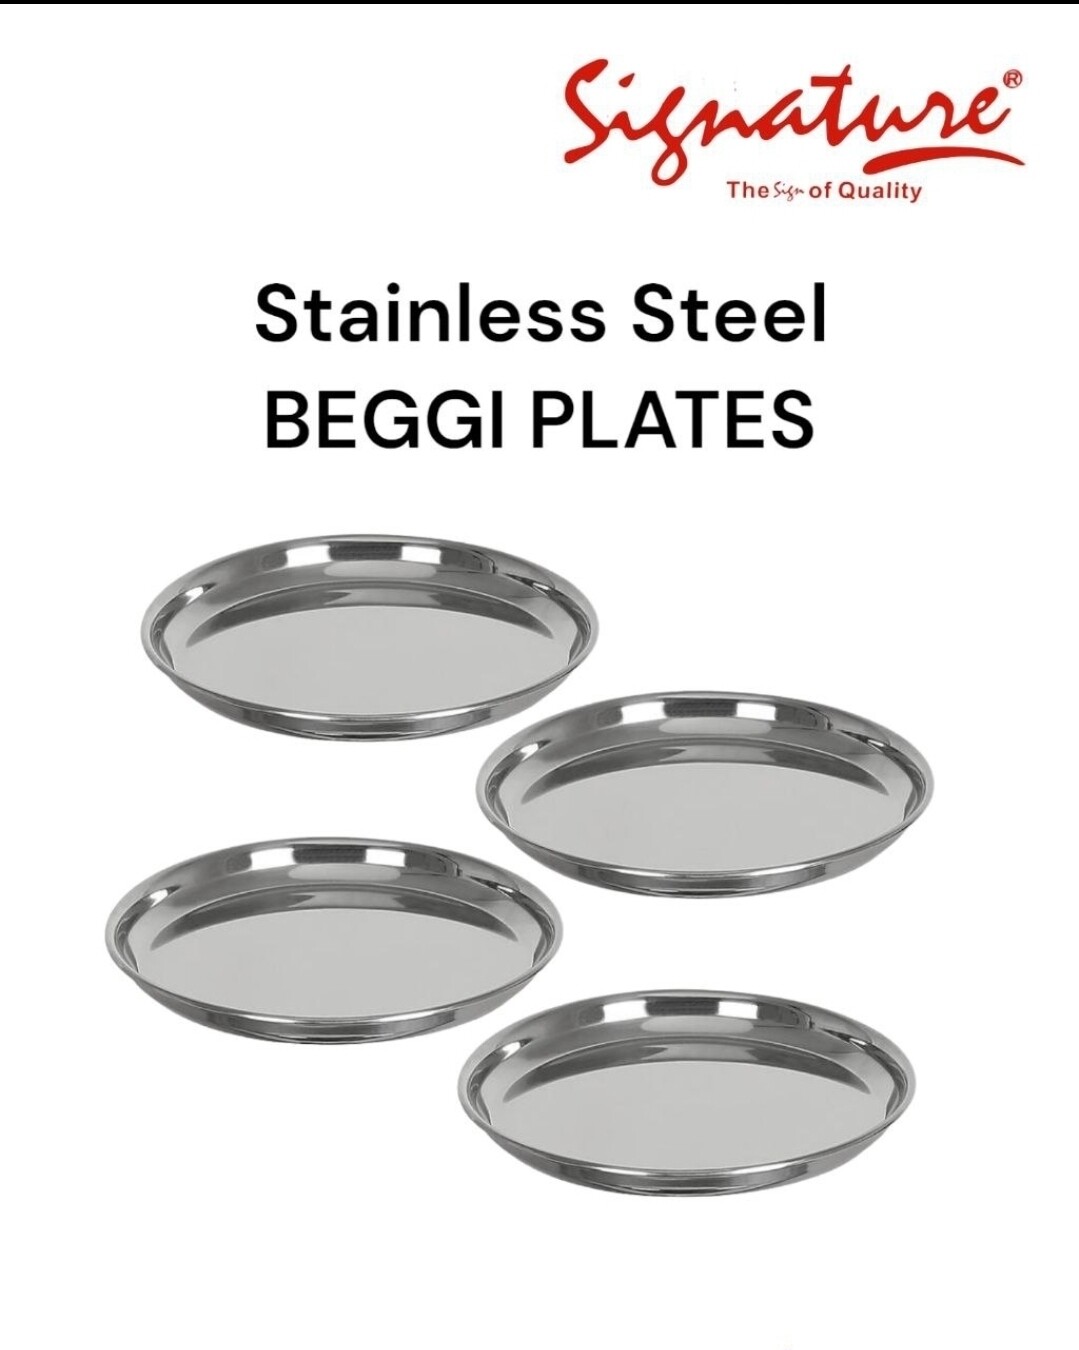 Signature 24cm stainless steel beggi plates